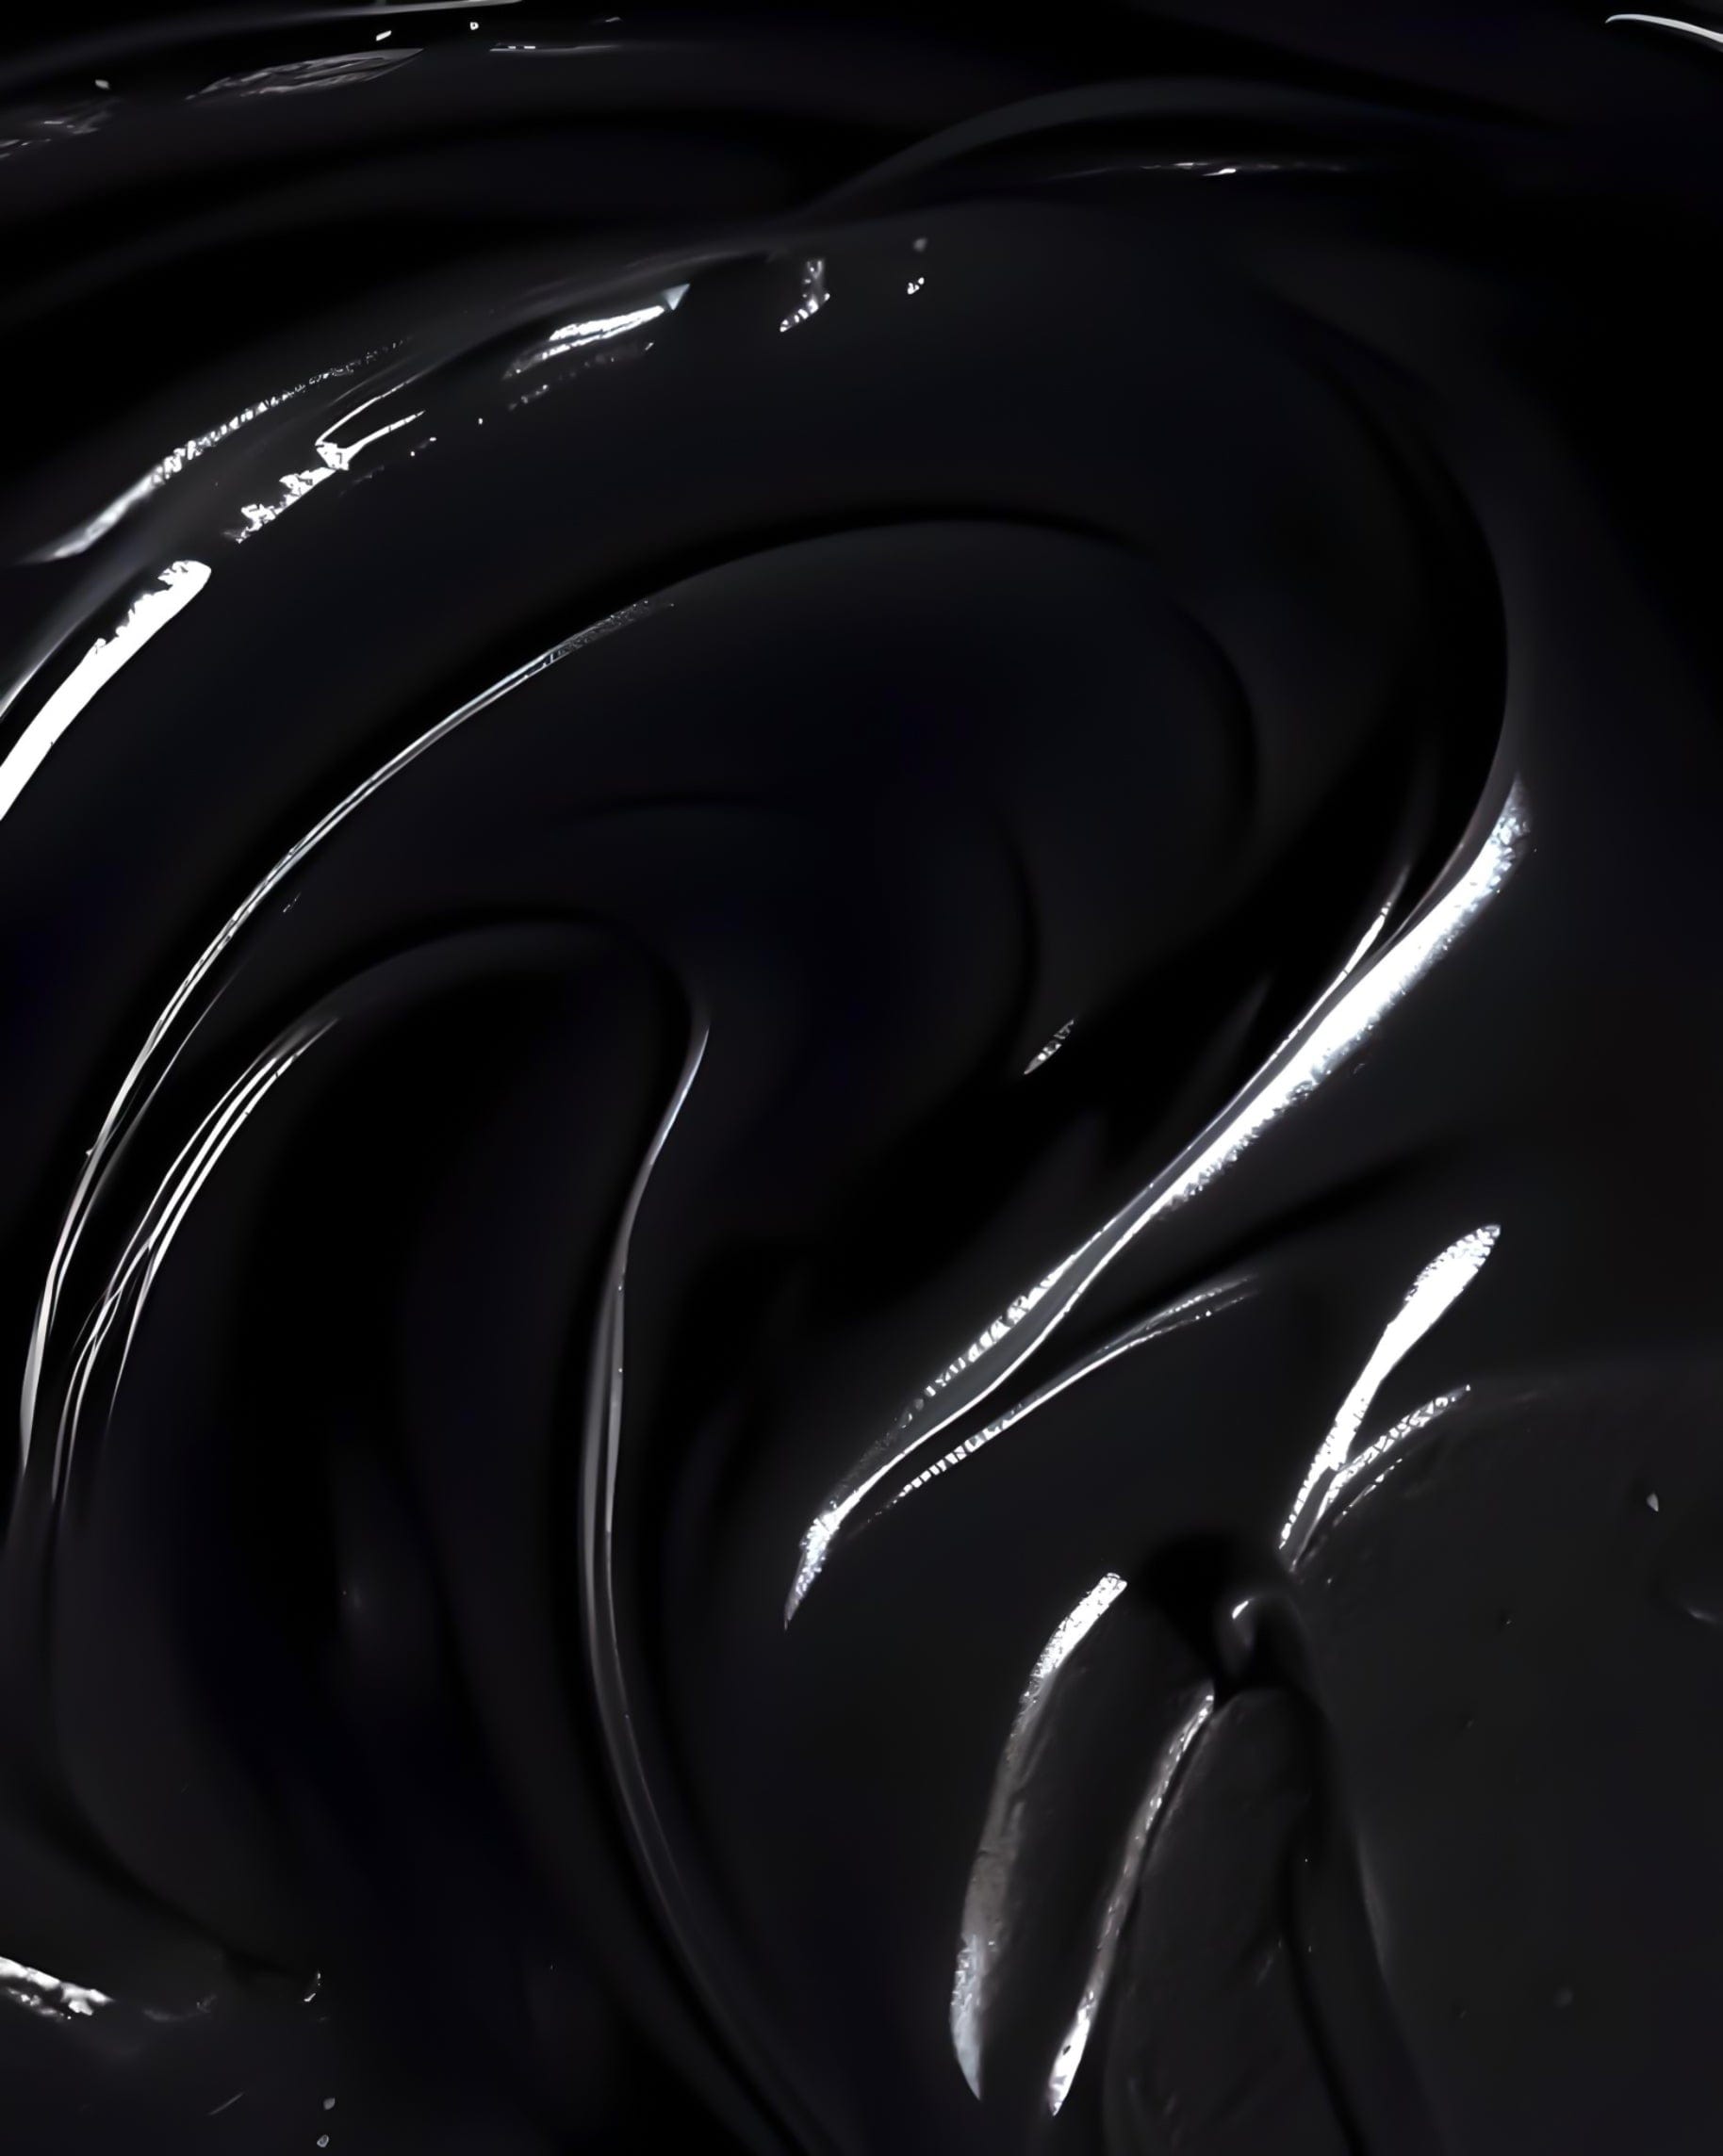 Eclipse Shadow Potion Paint | Black Base